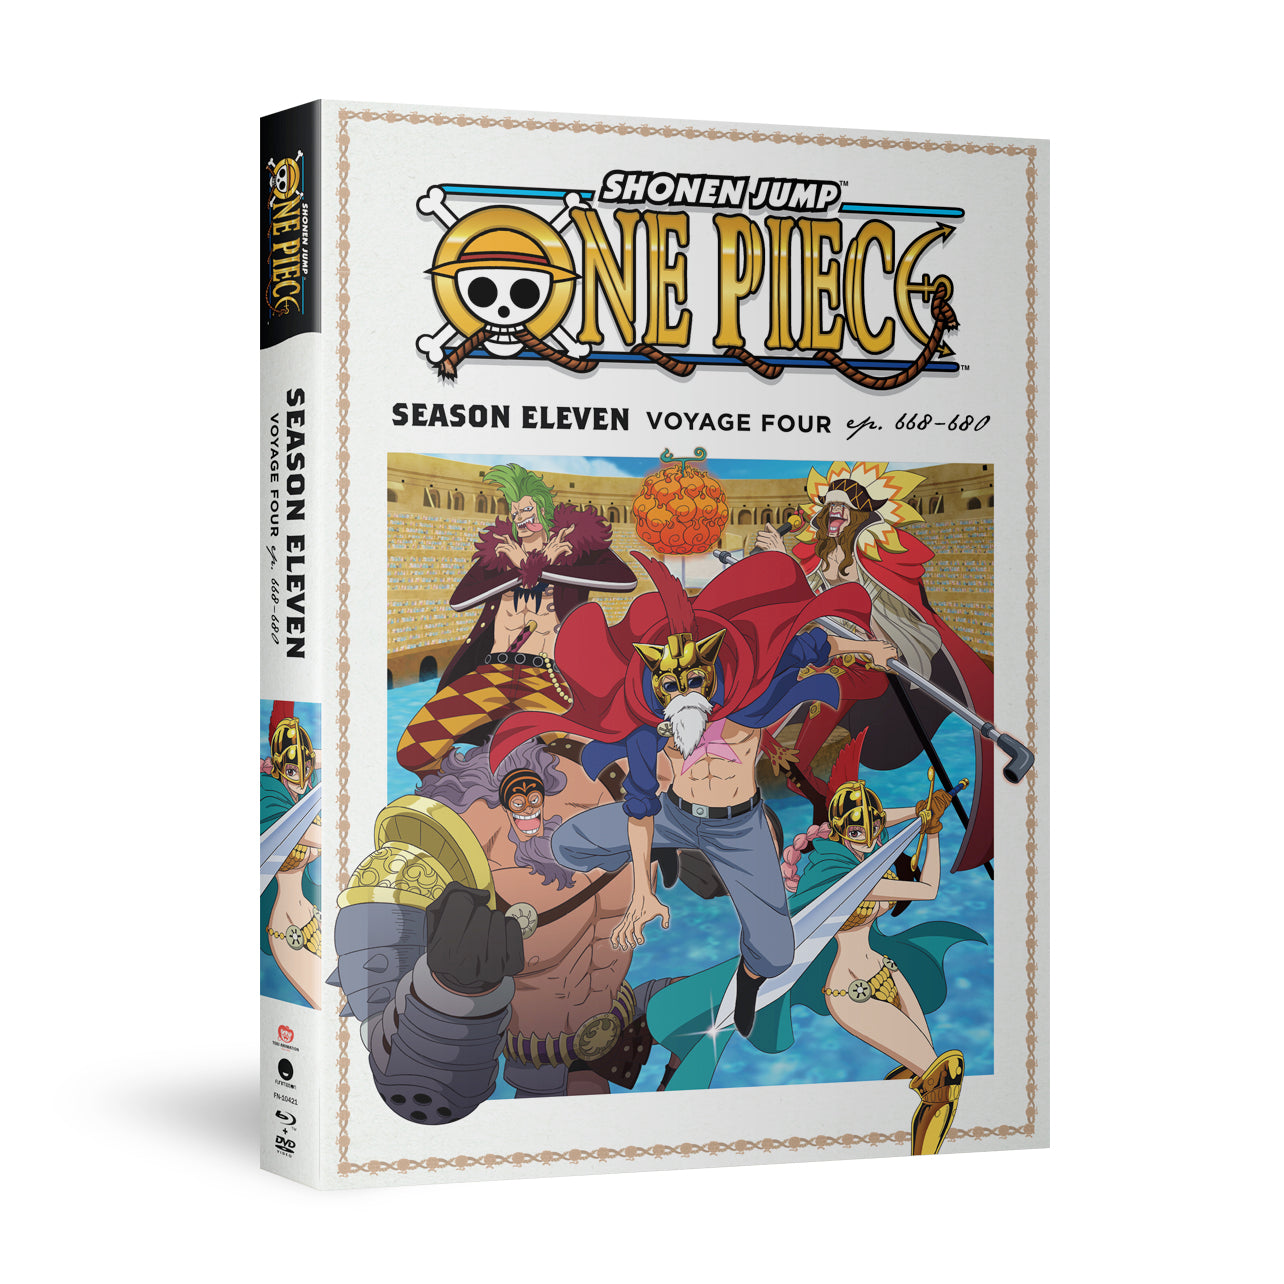 One Piece - Season Eleven Voyage Four - BD/DVD image count 0